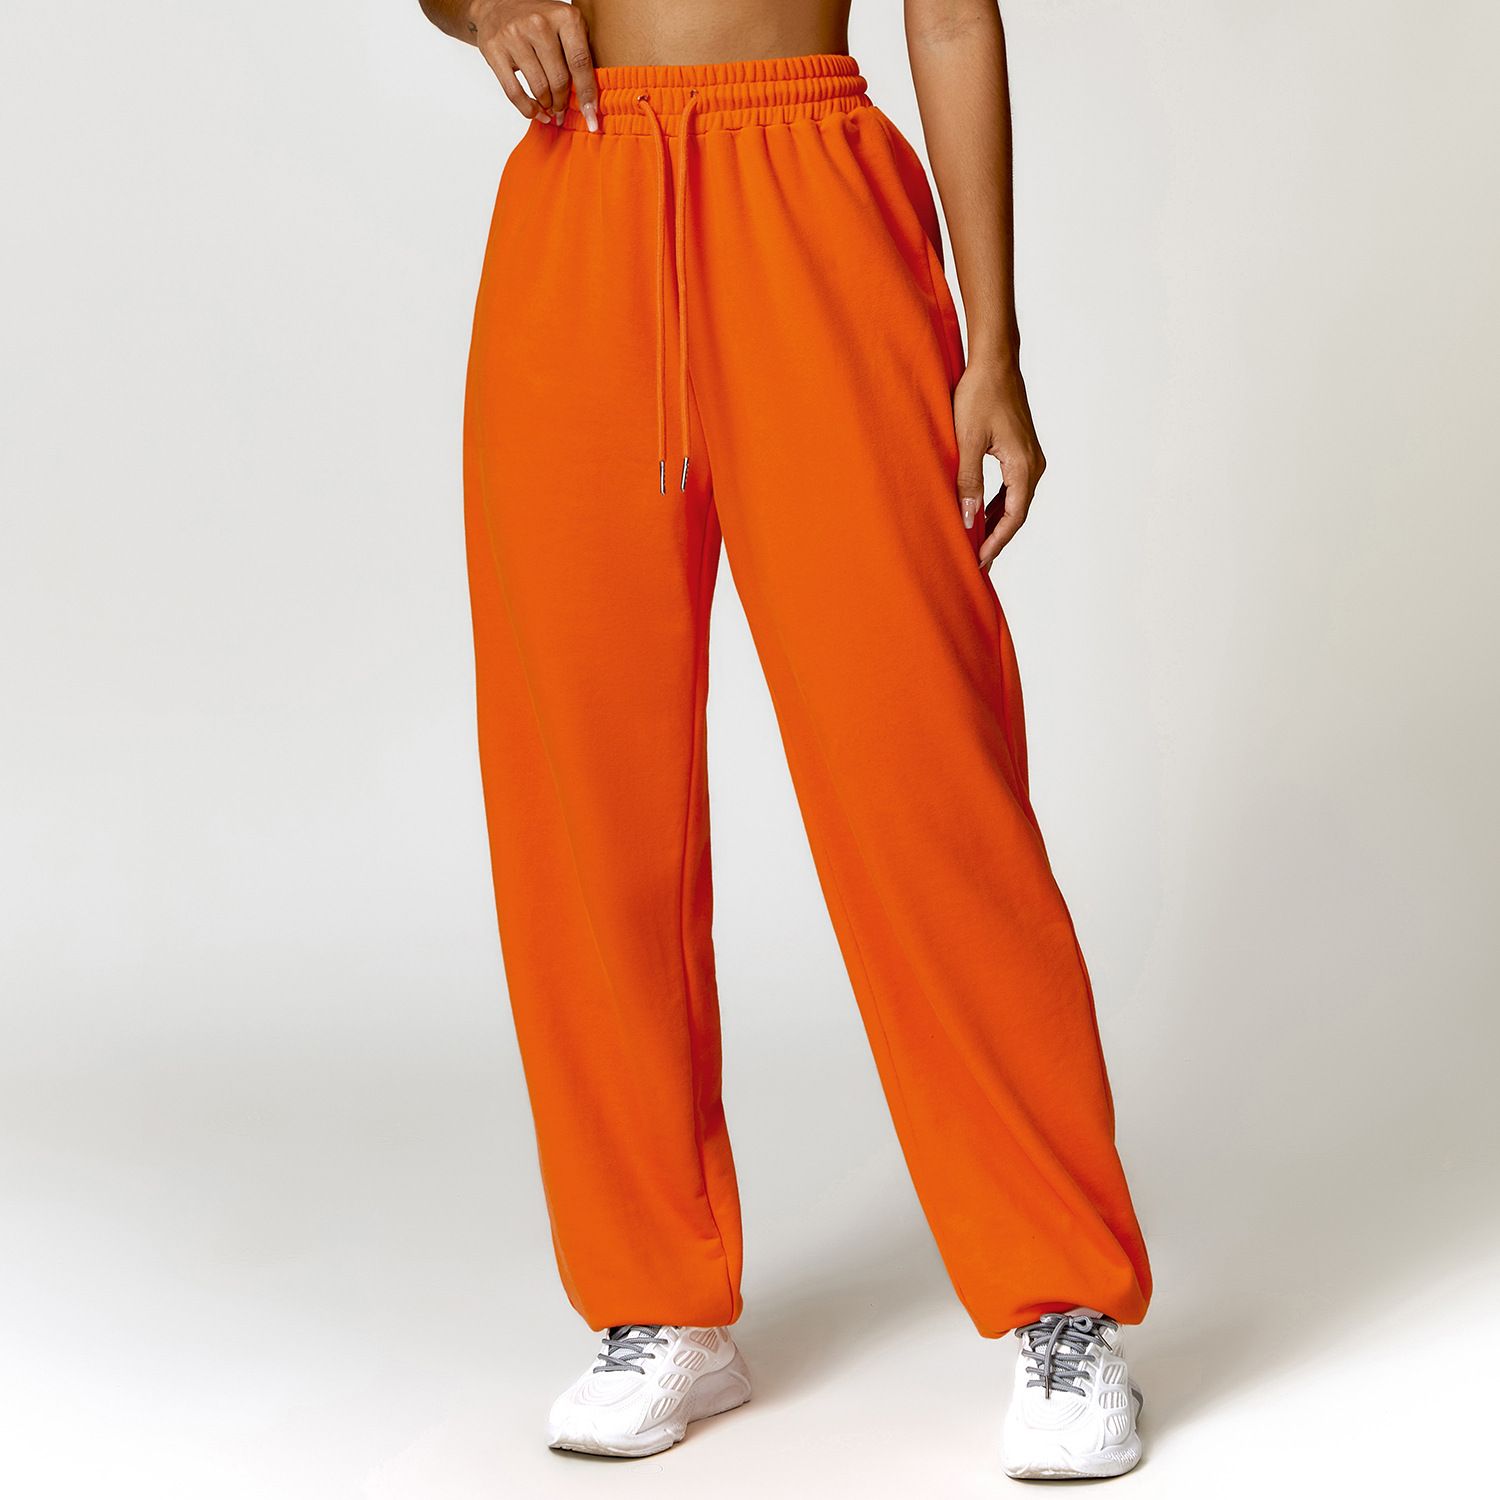 Bright orange【sweatpants】